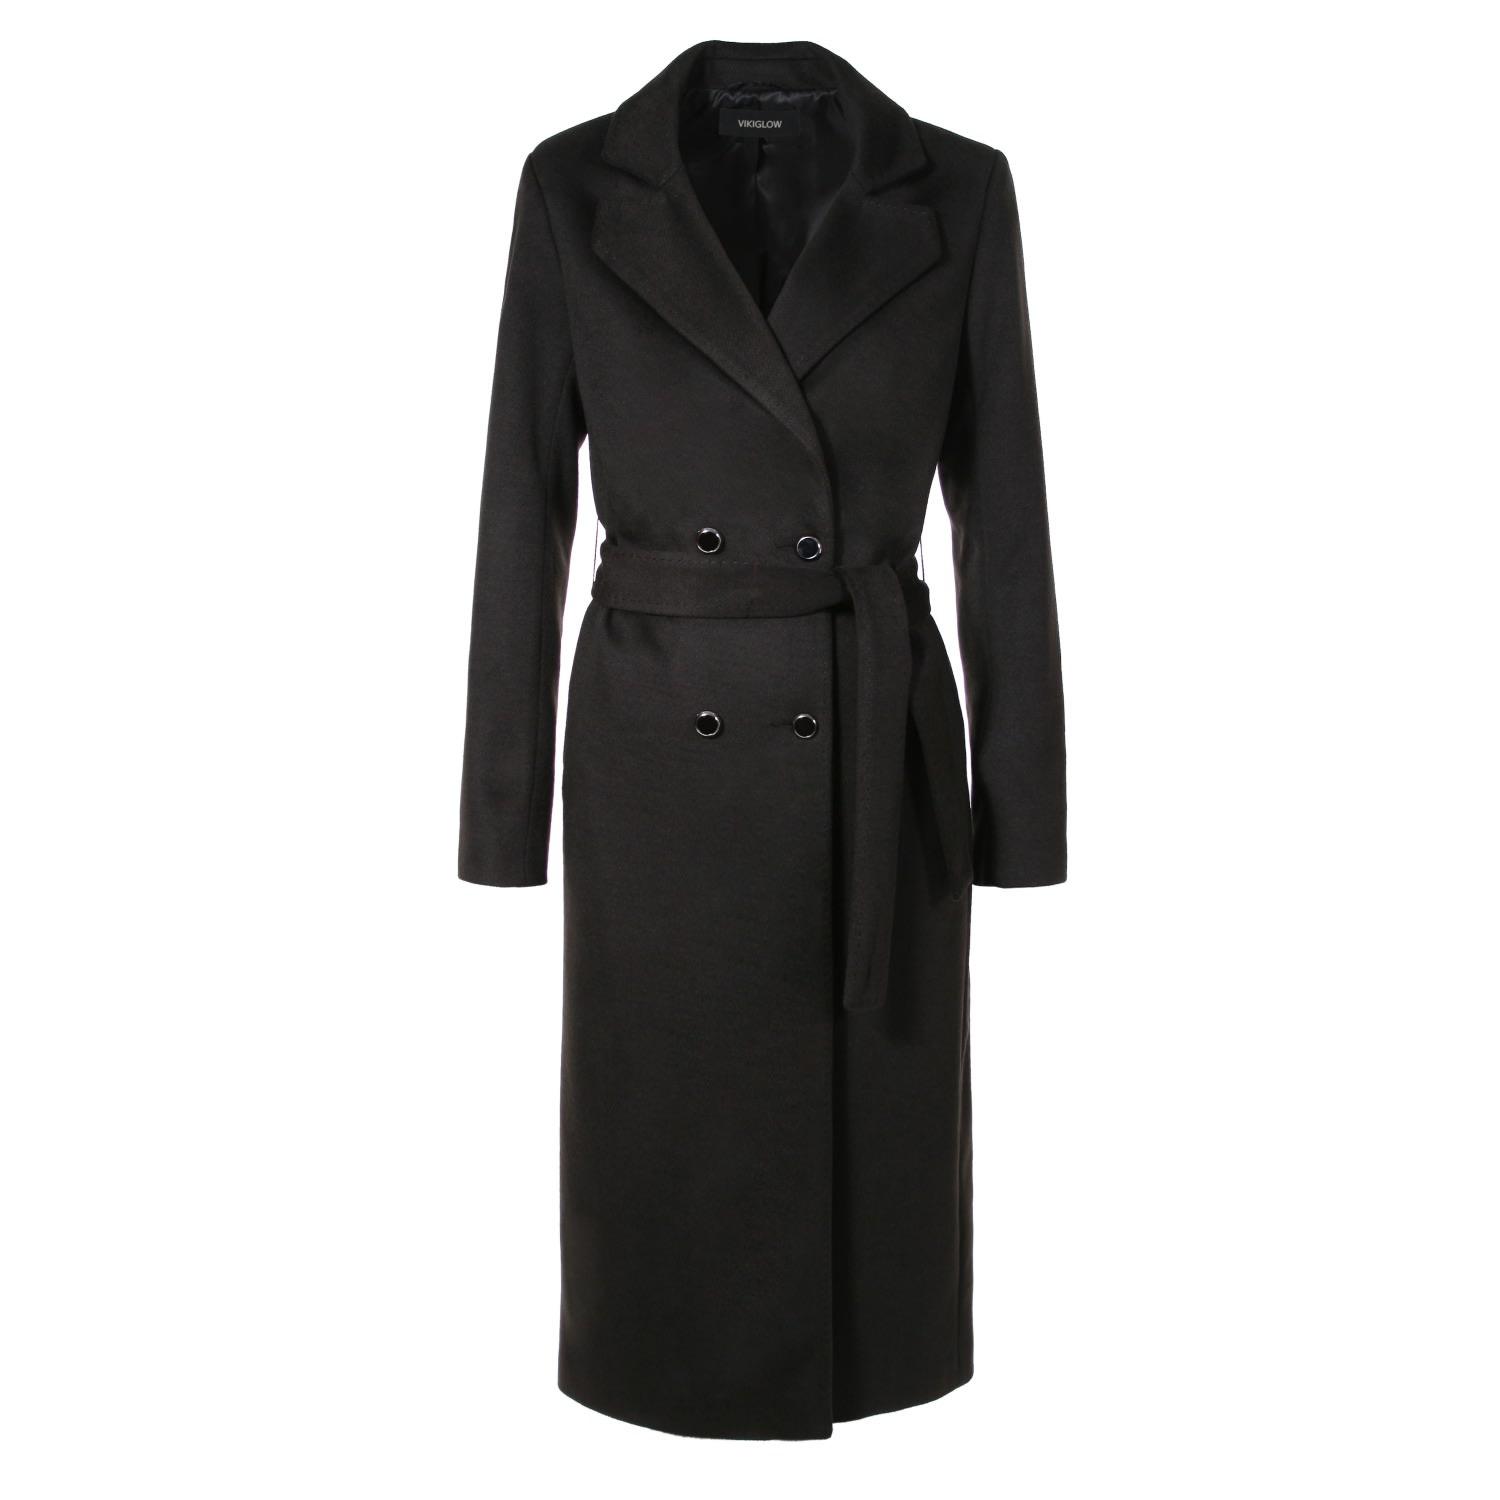 VIKIGLOW Adeline Double Breasted Midi Coat in Black | Lyst